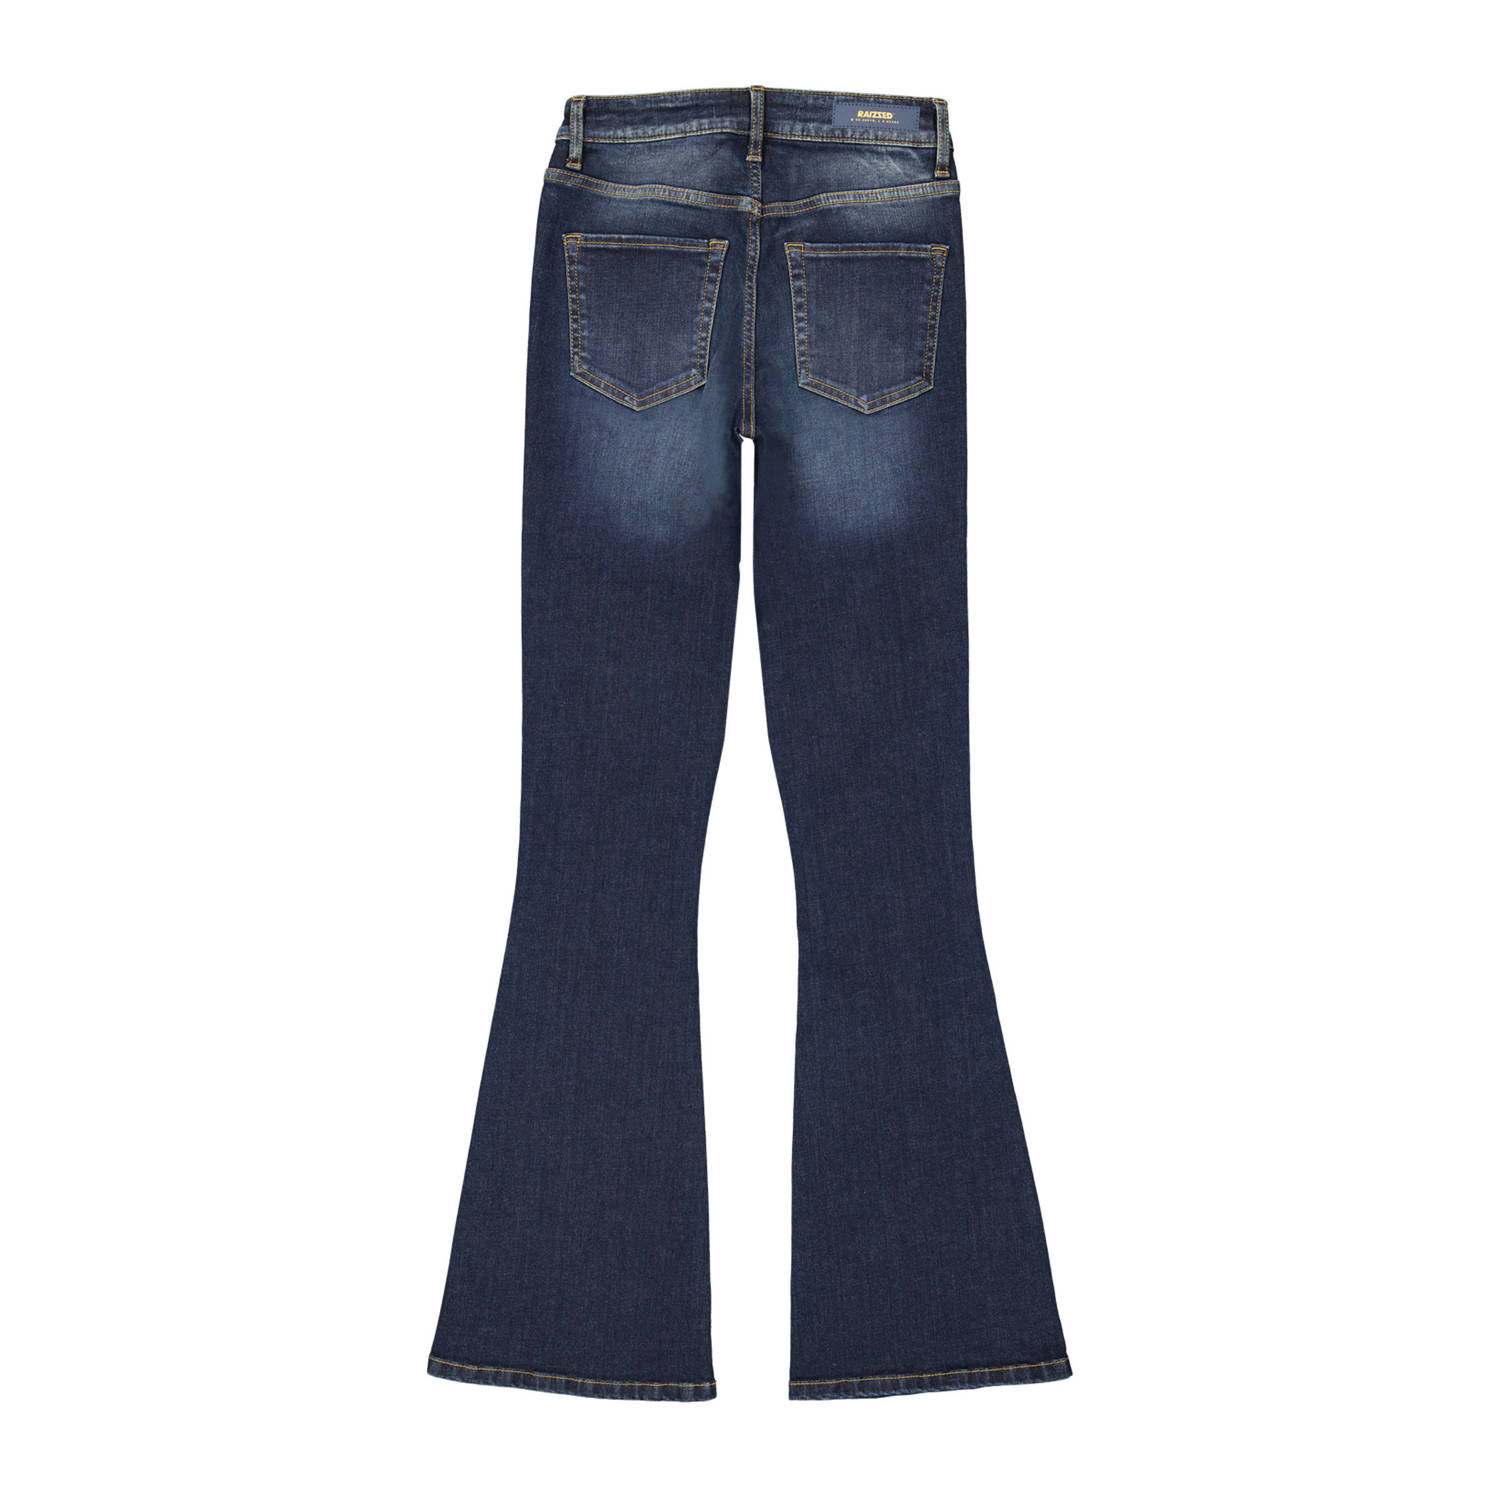 Raizzed high waist flared jeans Sunrise dark blue denim